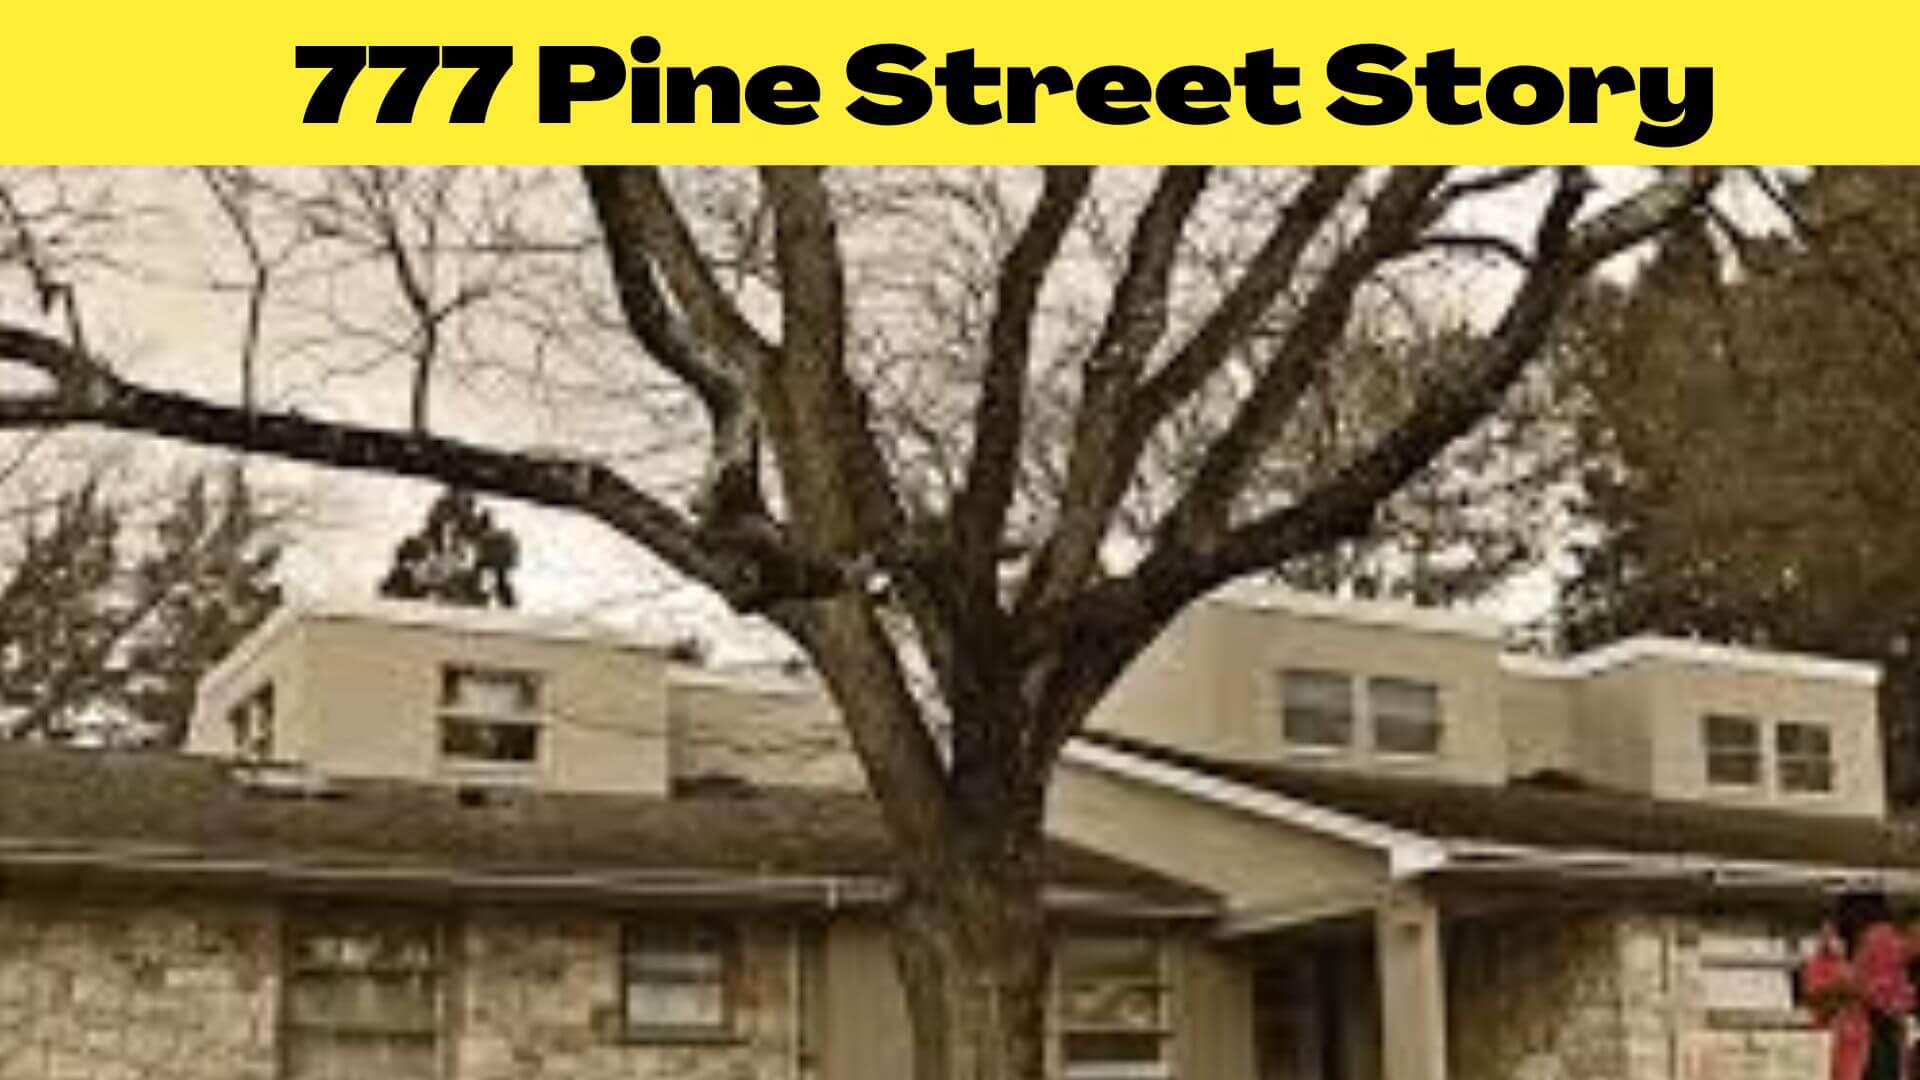 777 Pine Street Story